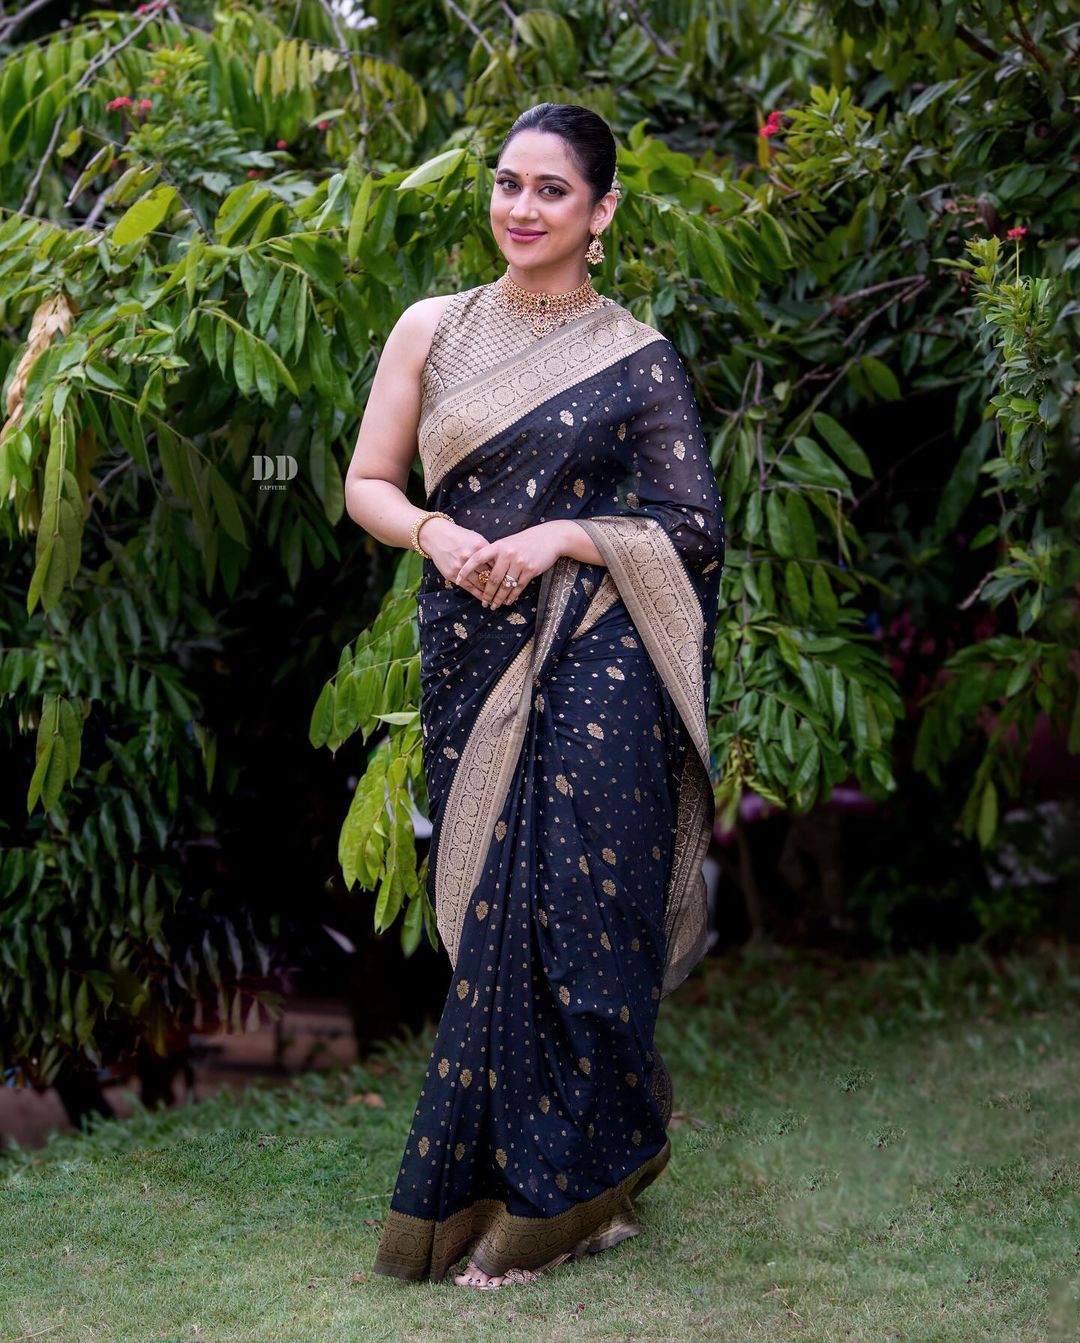 malayalam actress miya george images in sleeveless black saree